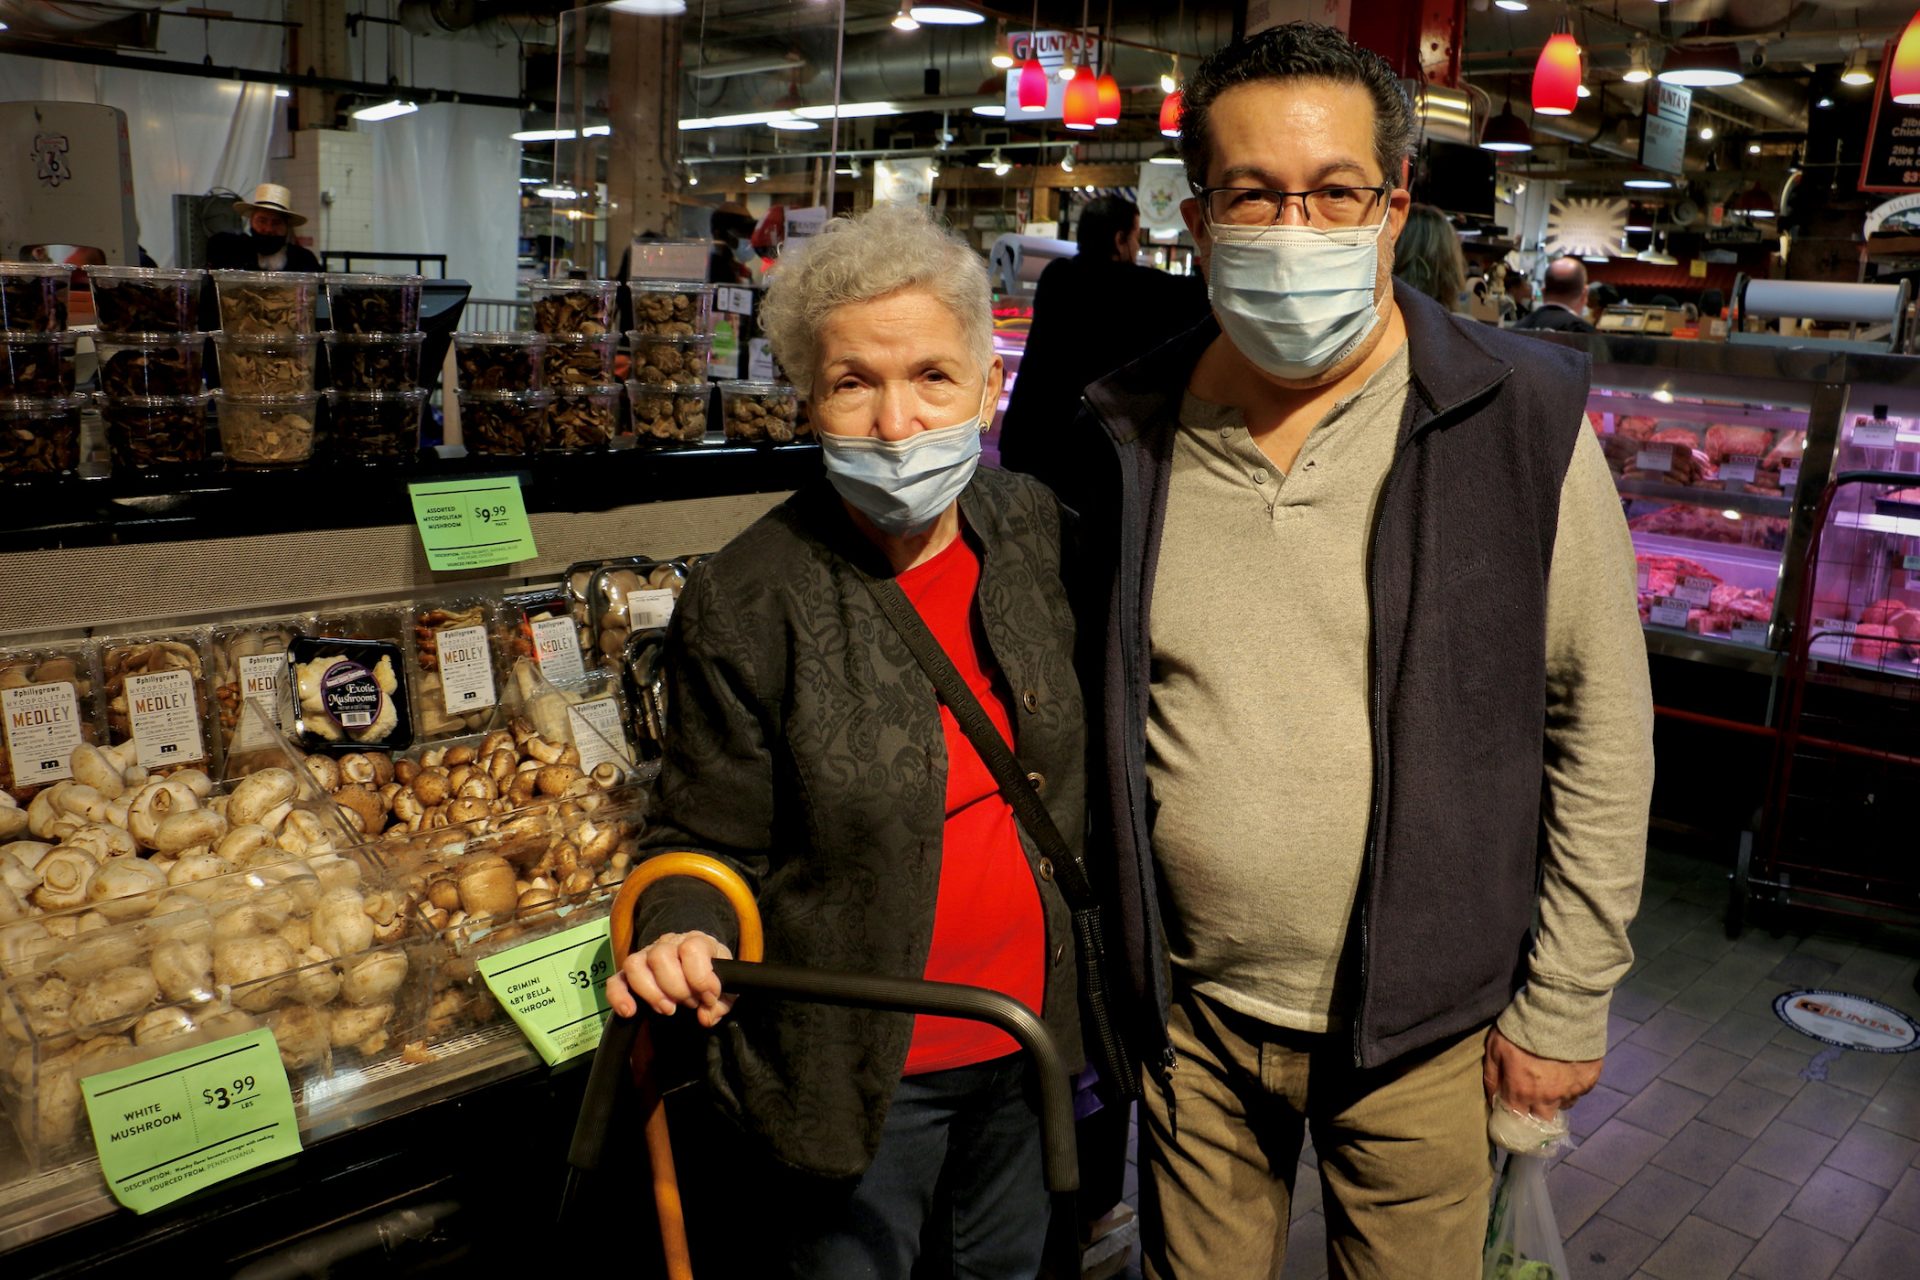 Lenore Gorenstein, 82, shops for produce at Reading Terminal Market with her son, Joel Gorenstein.